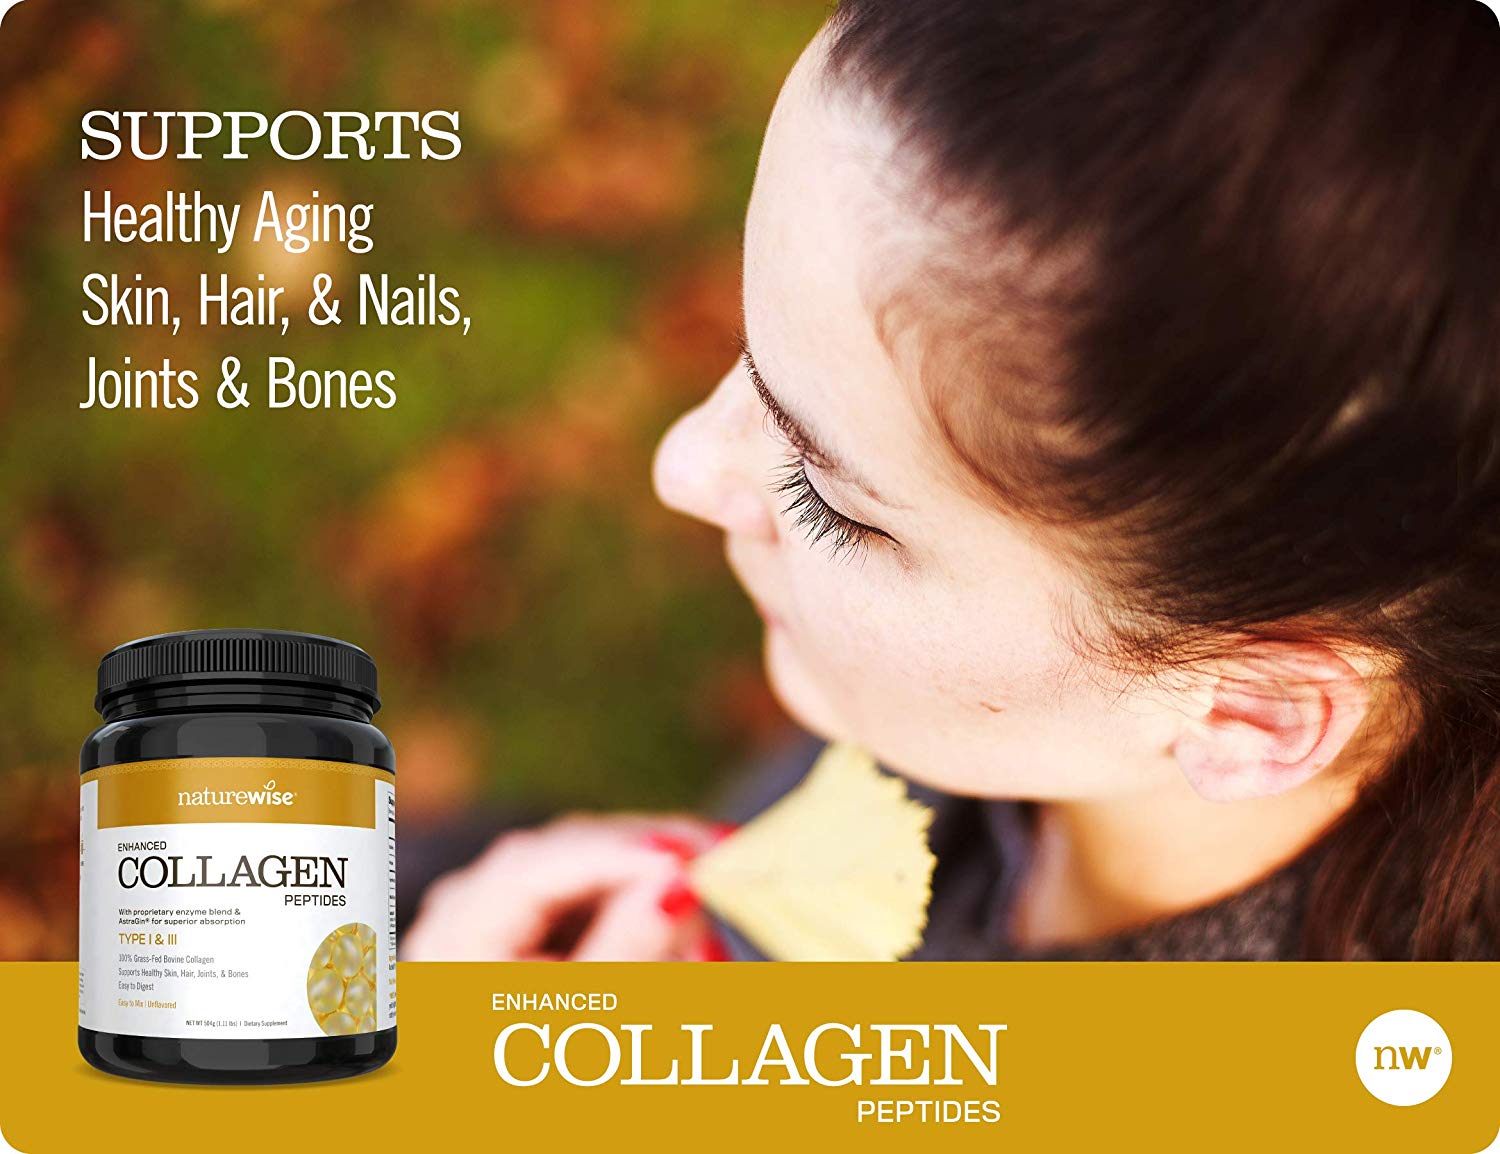 Enhanced Collagen Peptides Benefits